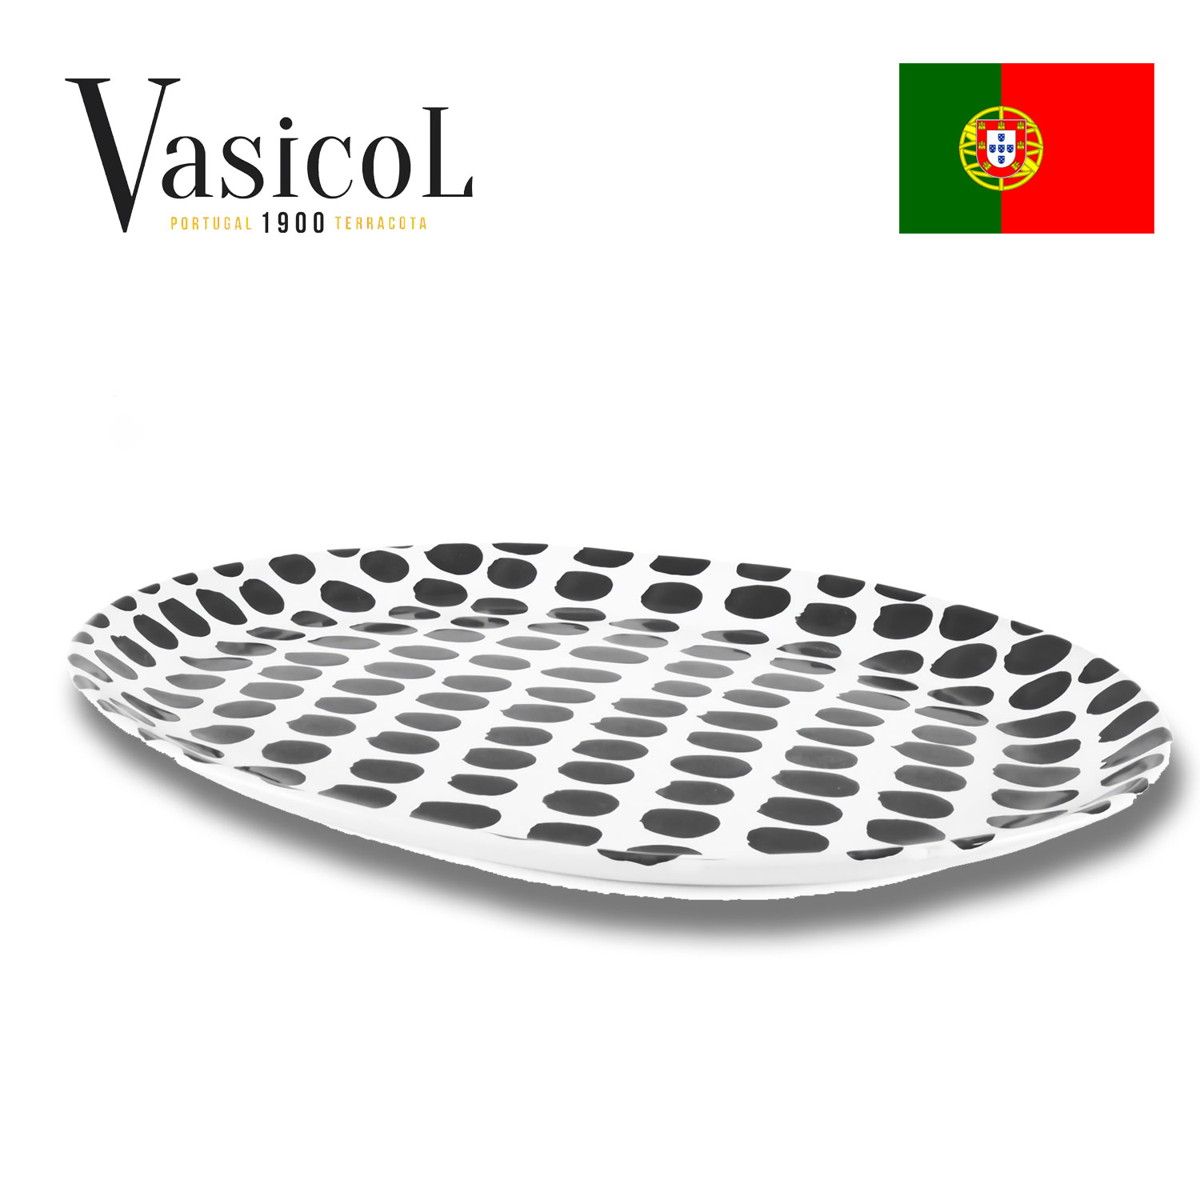 MARIA スモールオーバルトレイ ラージドット 皿 食器 ポルトガル製 テラコッタ 陶器